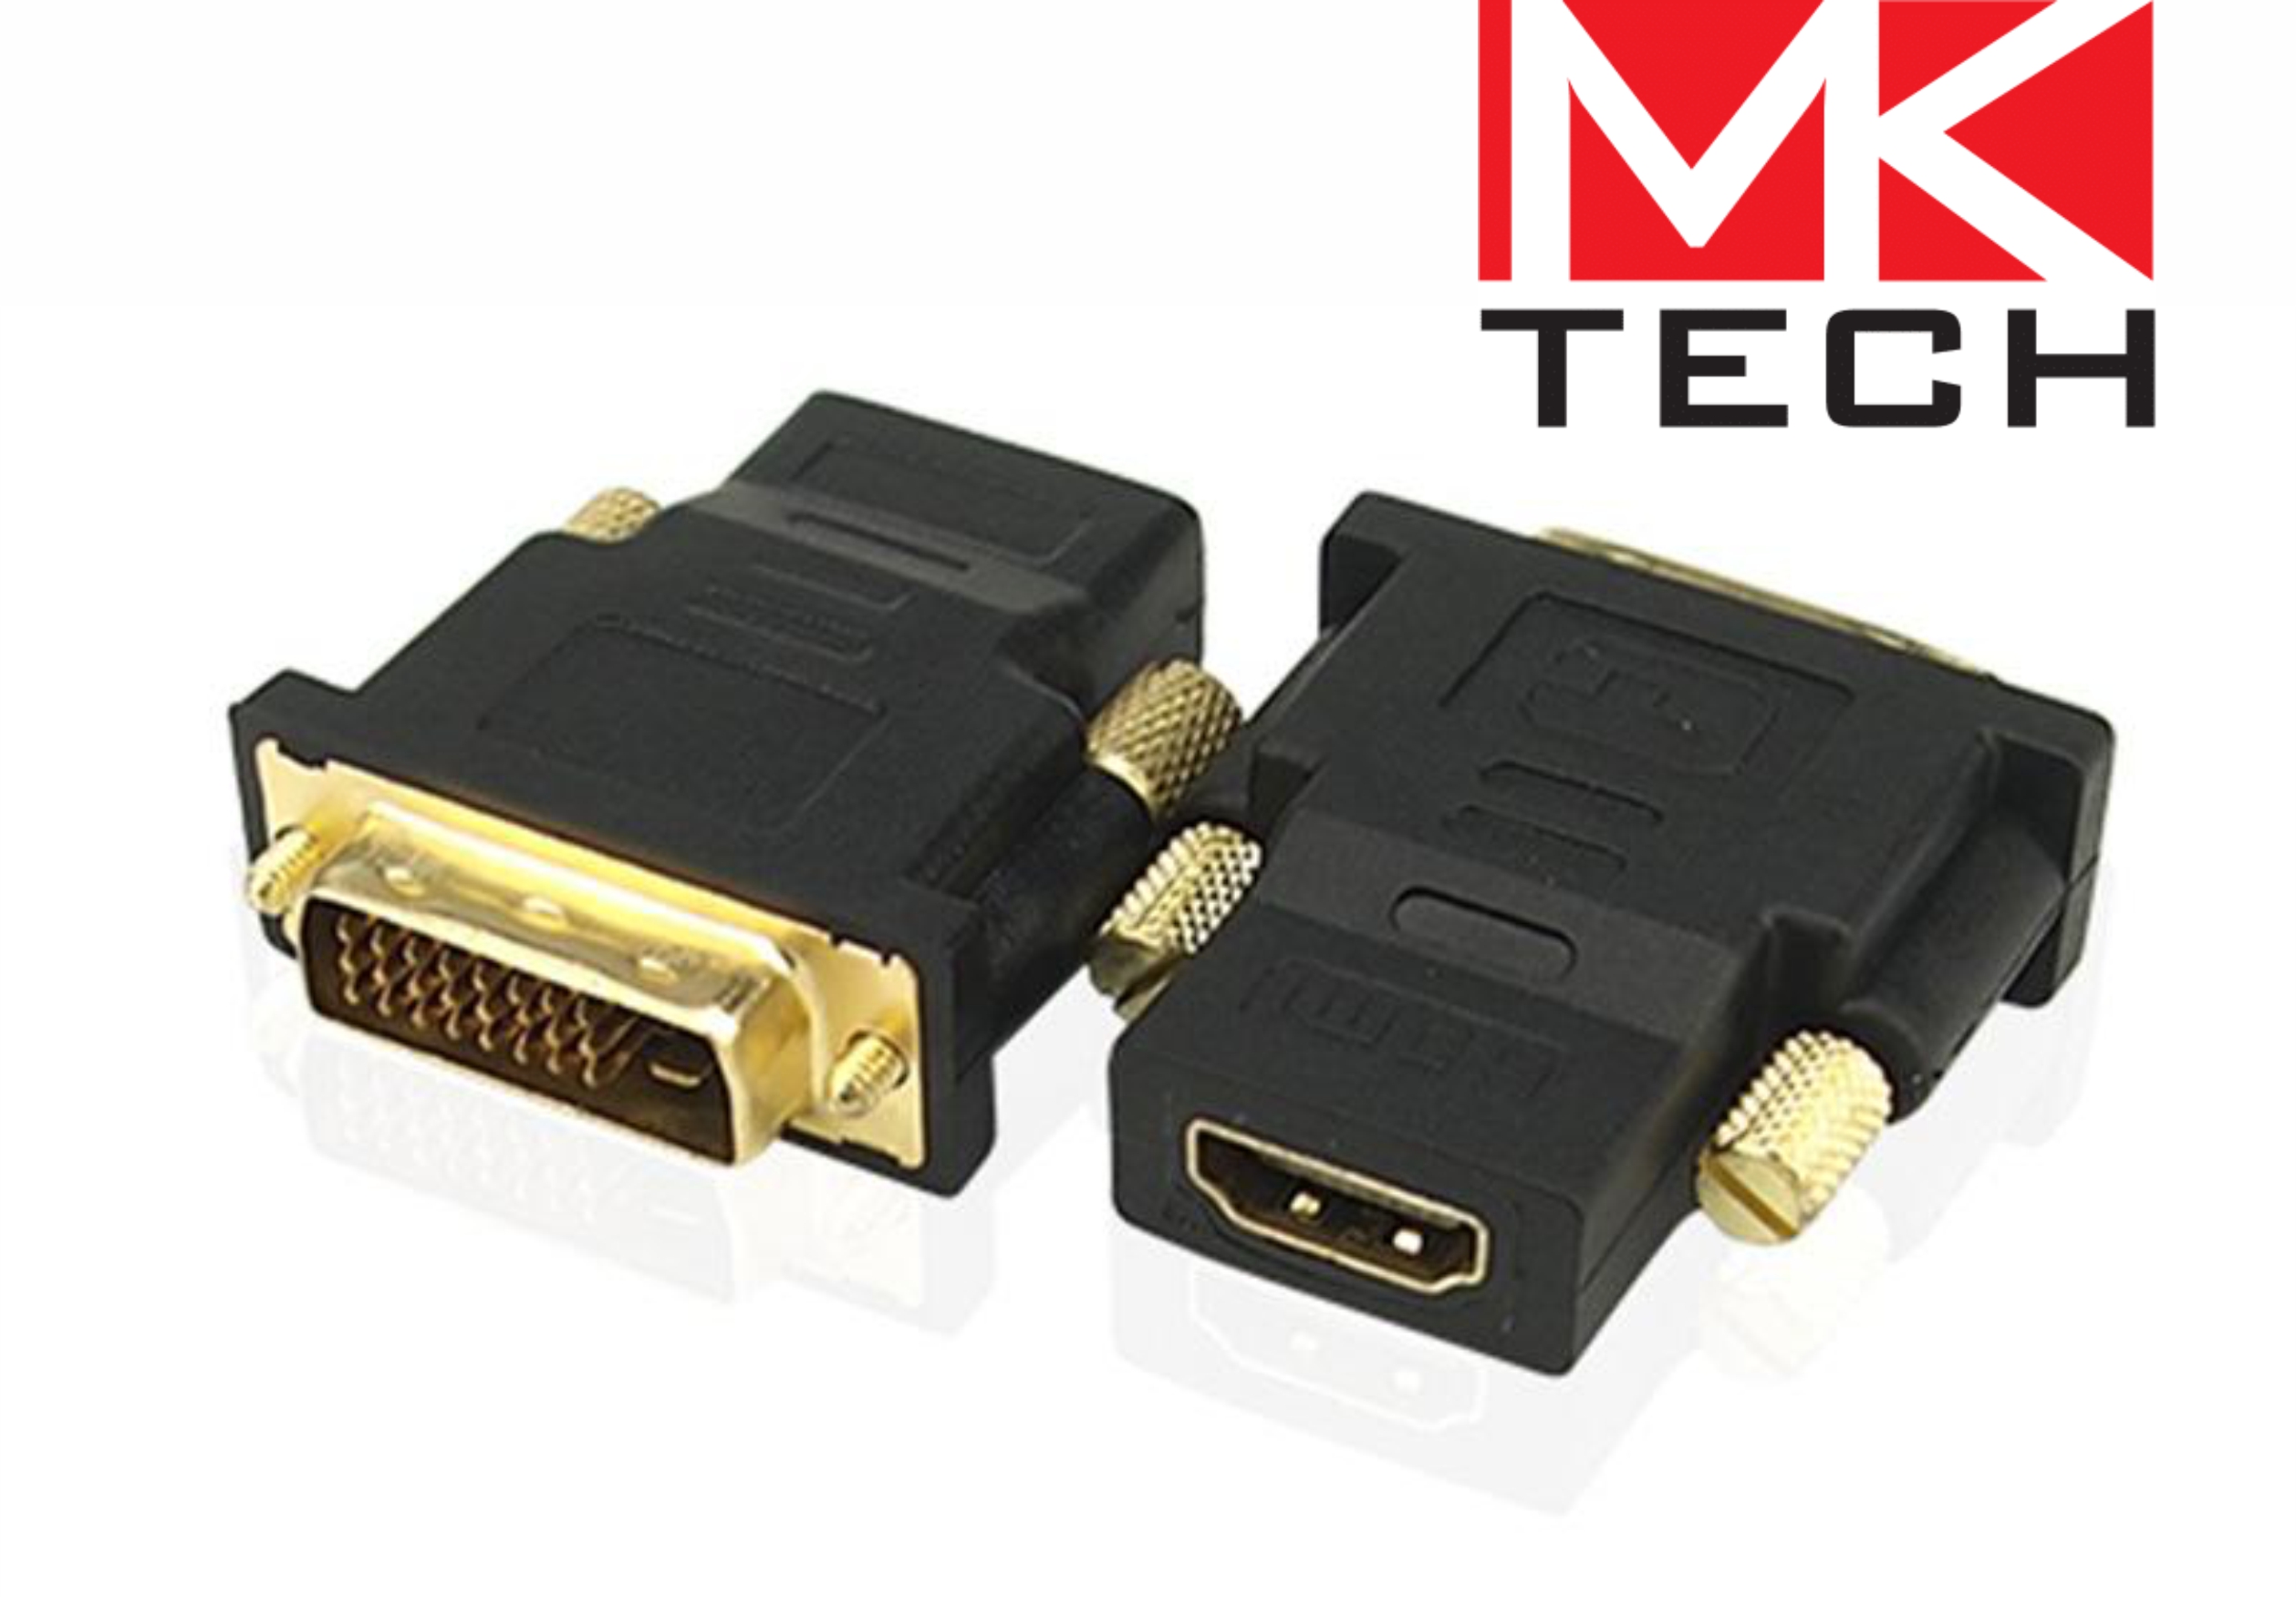 DVI-D 24+1 M to HDMI F gold MKTECH